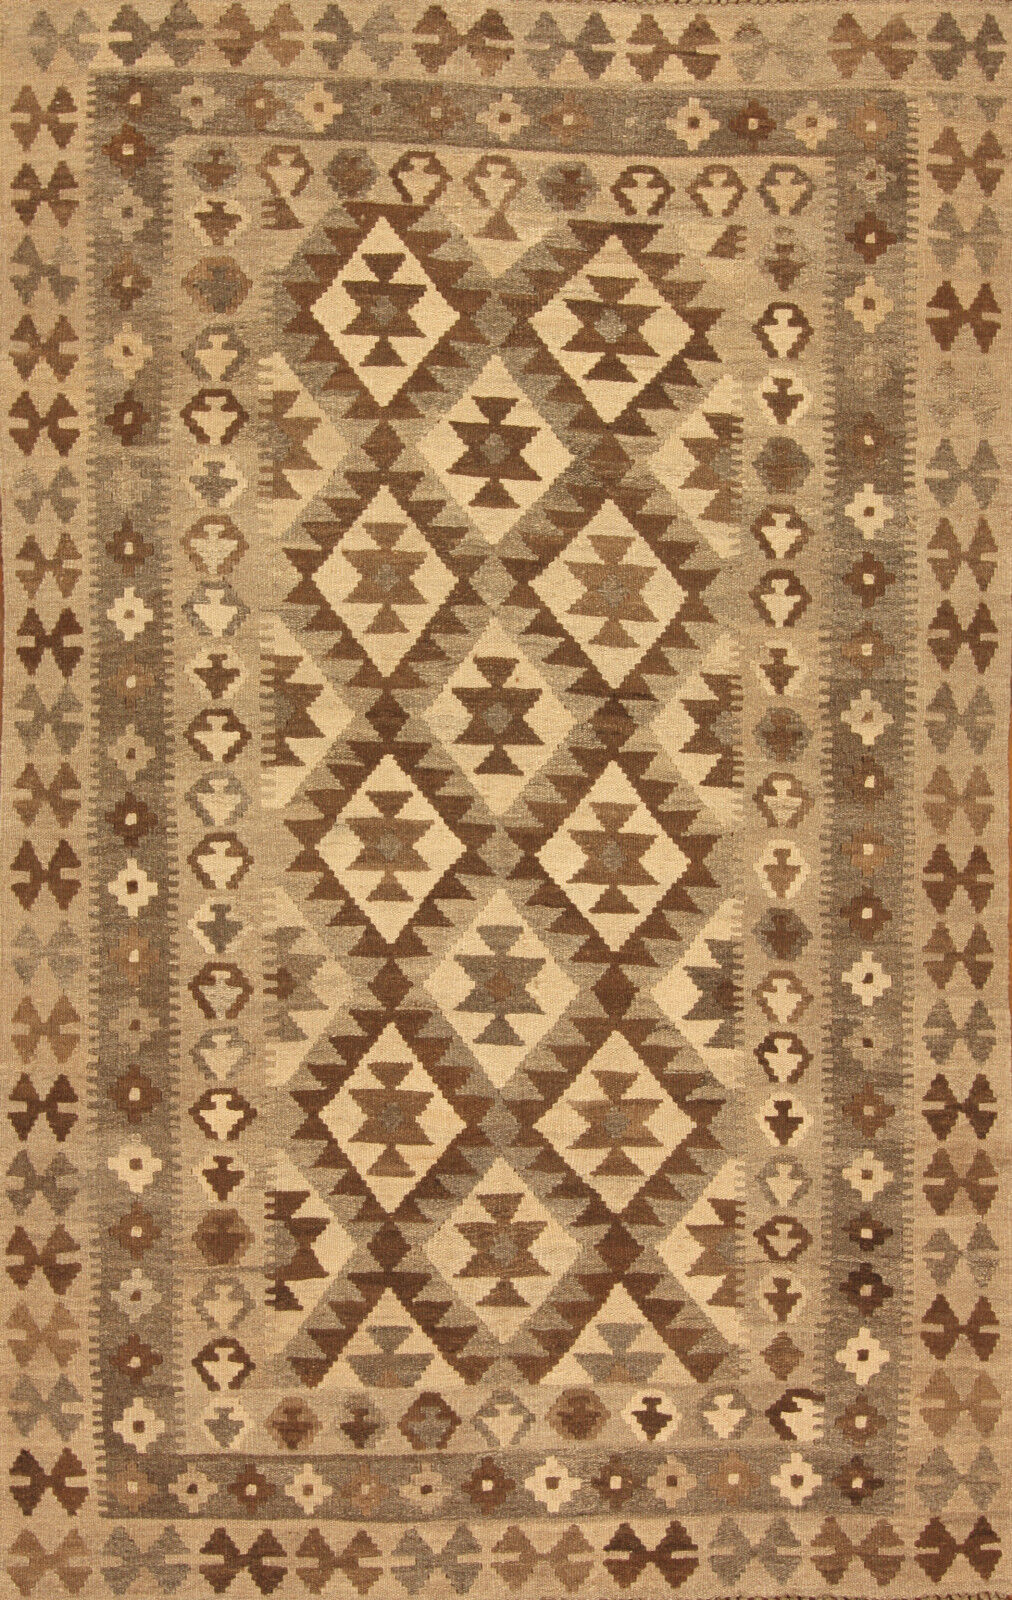 Close-up of the intricate geometric patterns on the Handmade Vintage Afghan Flatweave Kilim